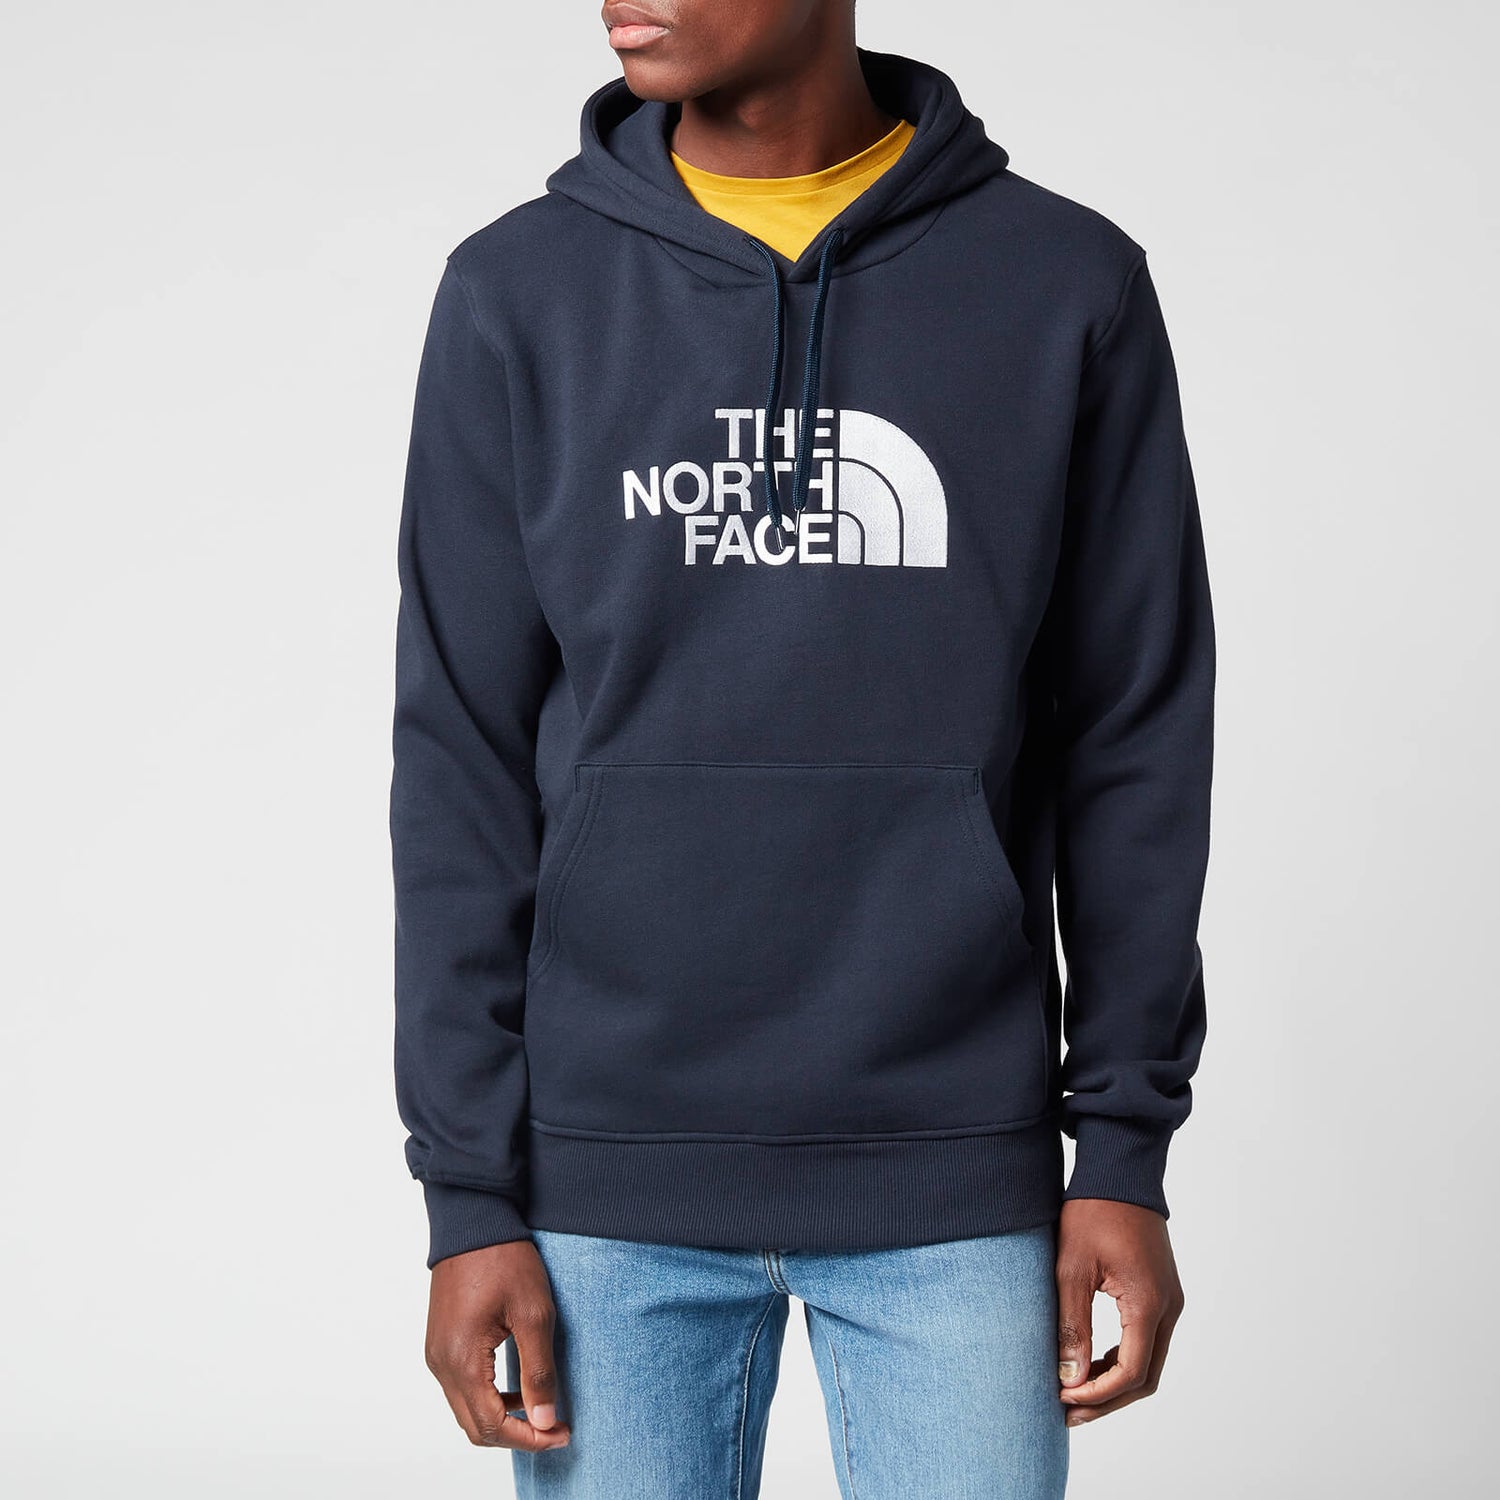 The North Face Men's Drew Peak Pullover Hoodie - Urban Navy/TNF White - S